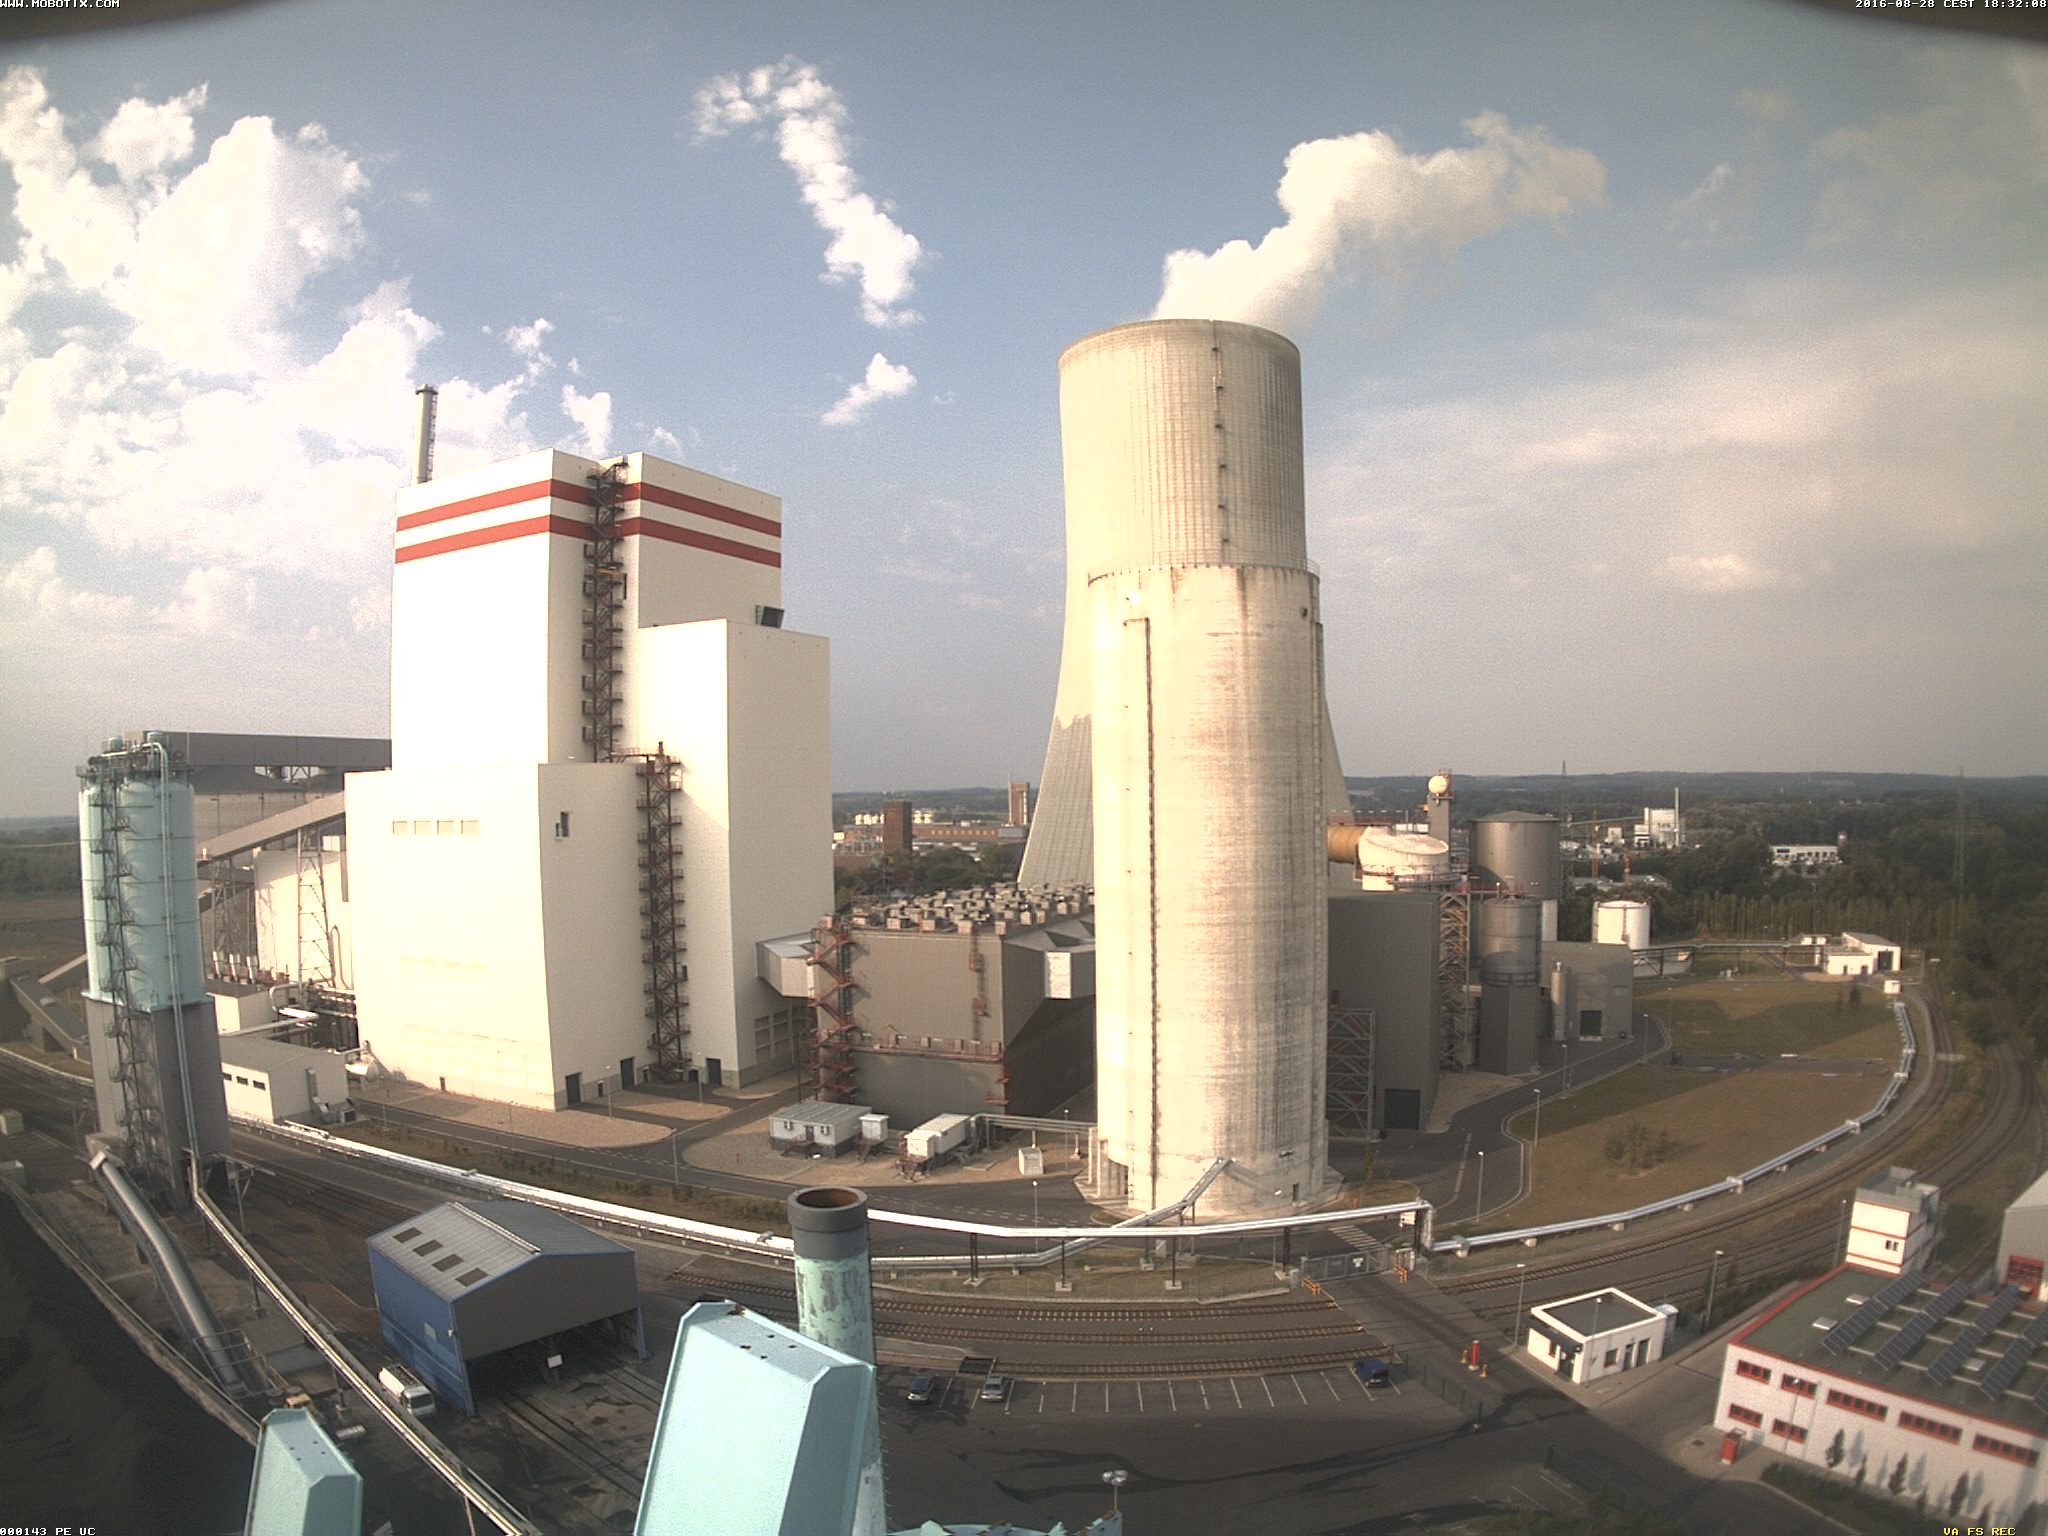 The Trianel Coal Power Plant